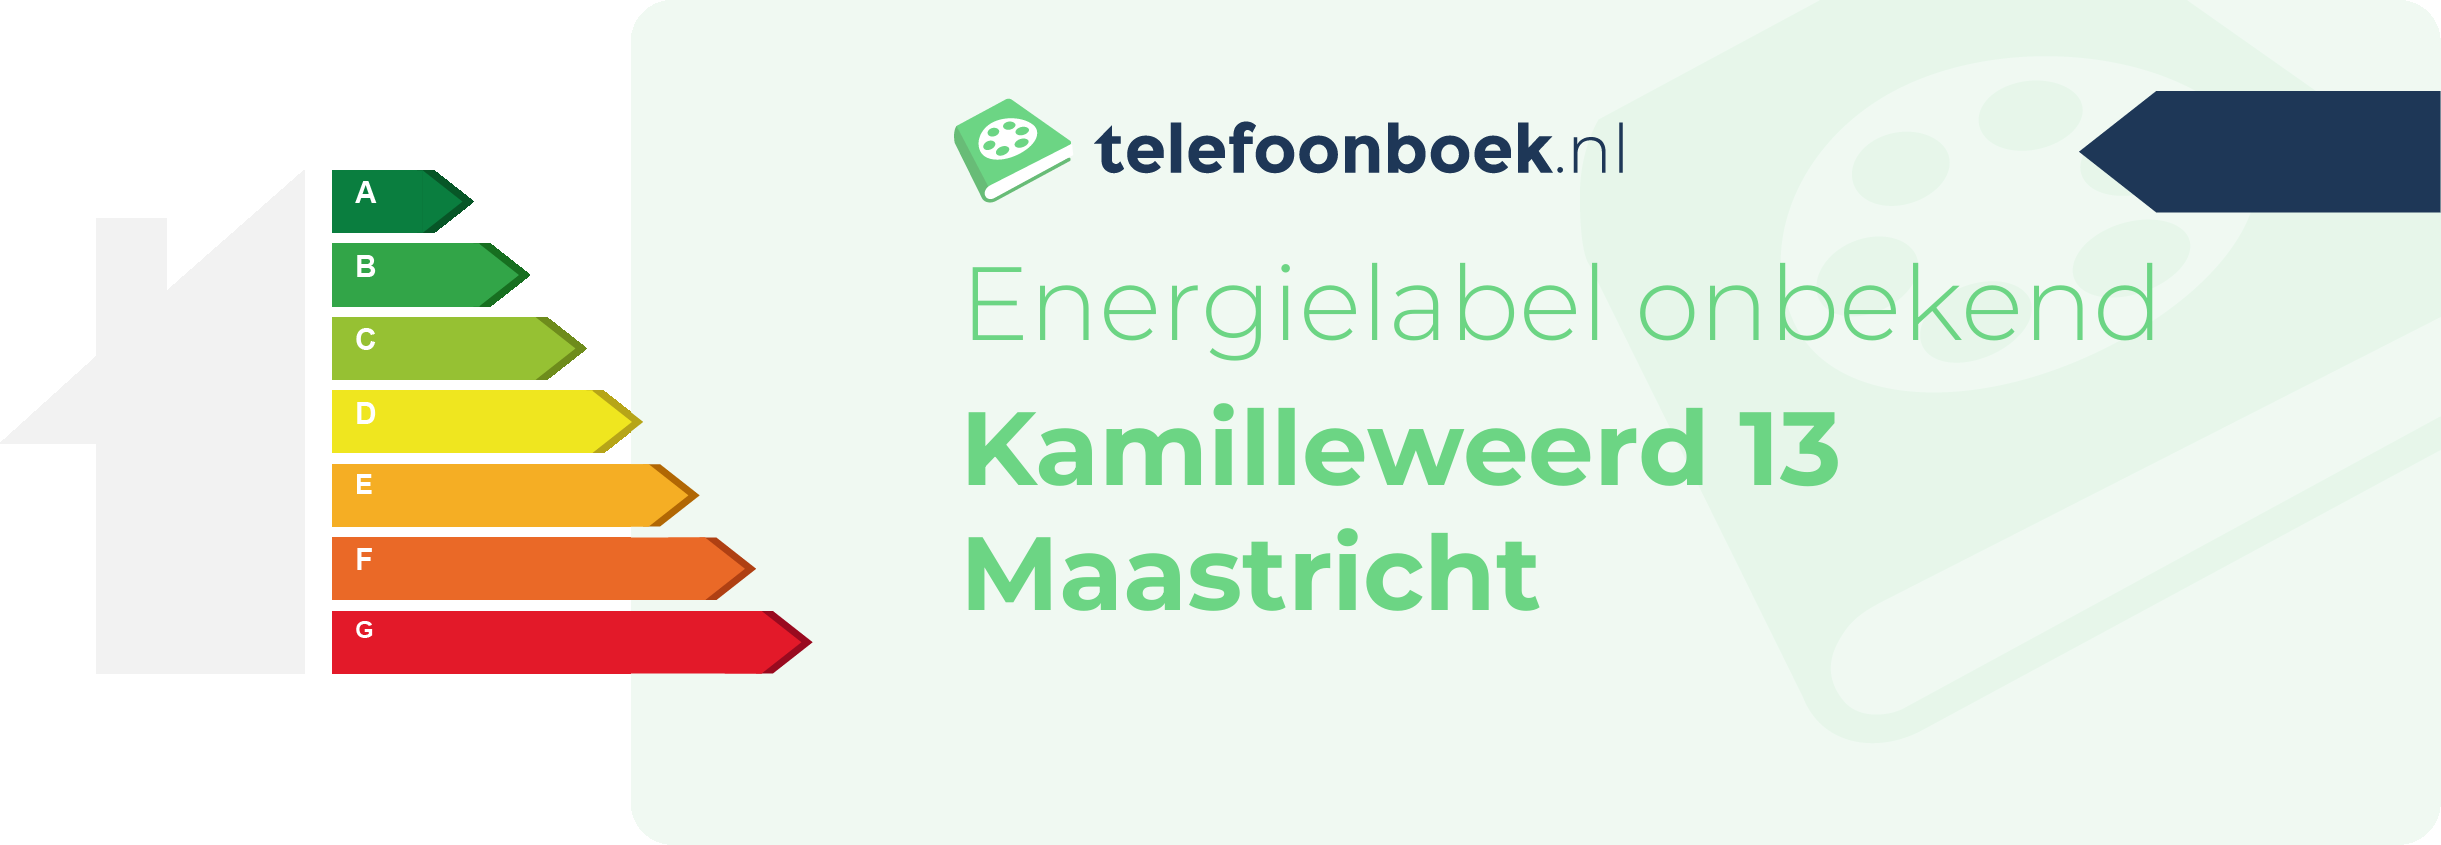 Energielabel Kamilleweerd 13 Maastricht